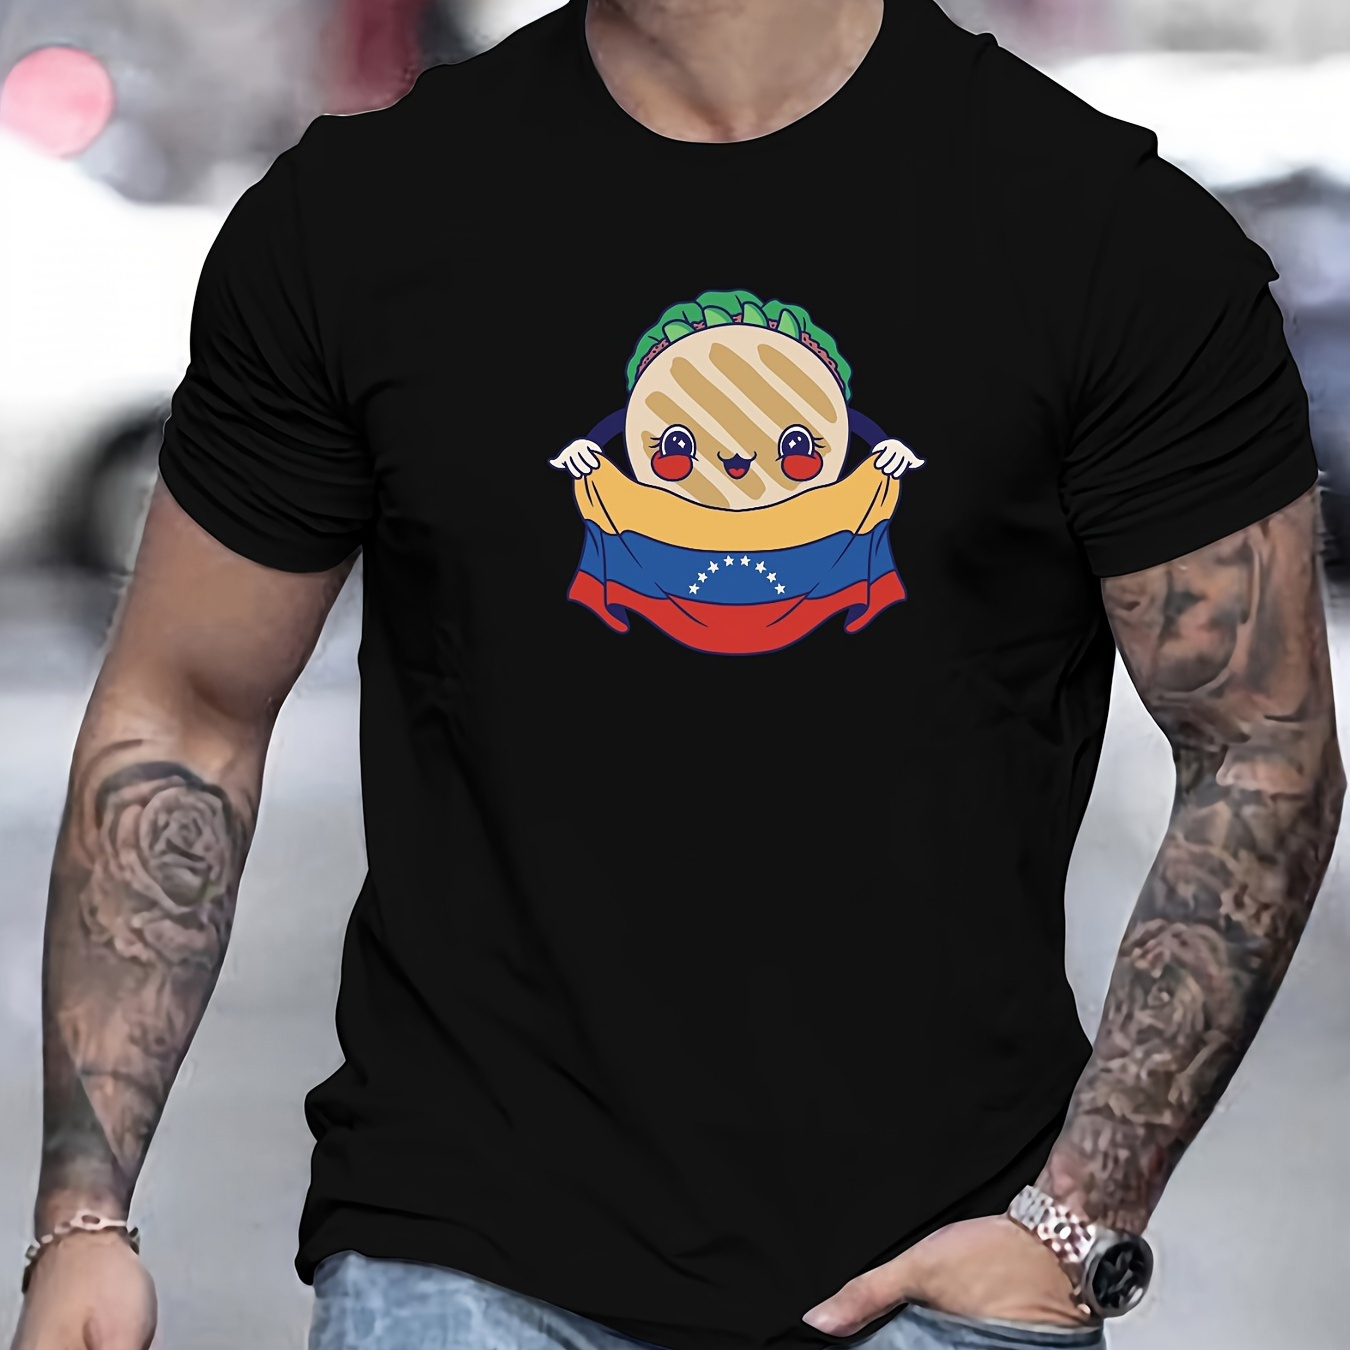 

Men's Hamburger La Venezuela Flag Pattern Print T-shirt - Soft, Breathable, And Comfortable For All Seasons - Regular Fit, Slight Stretch, And Knit Fabric